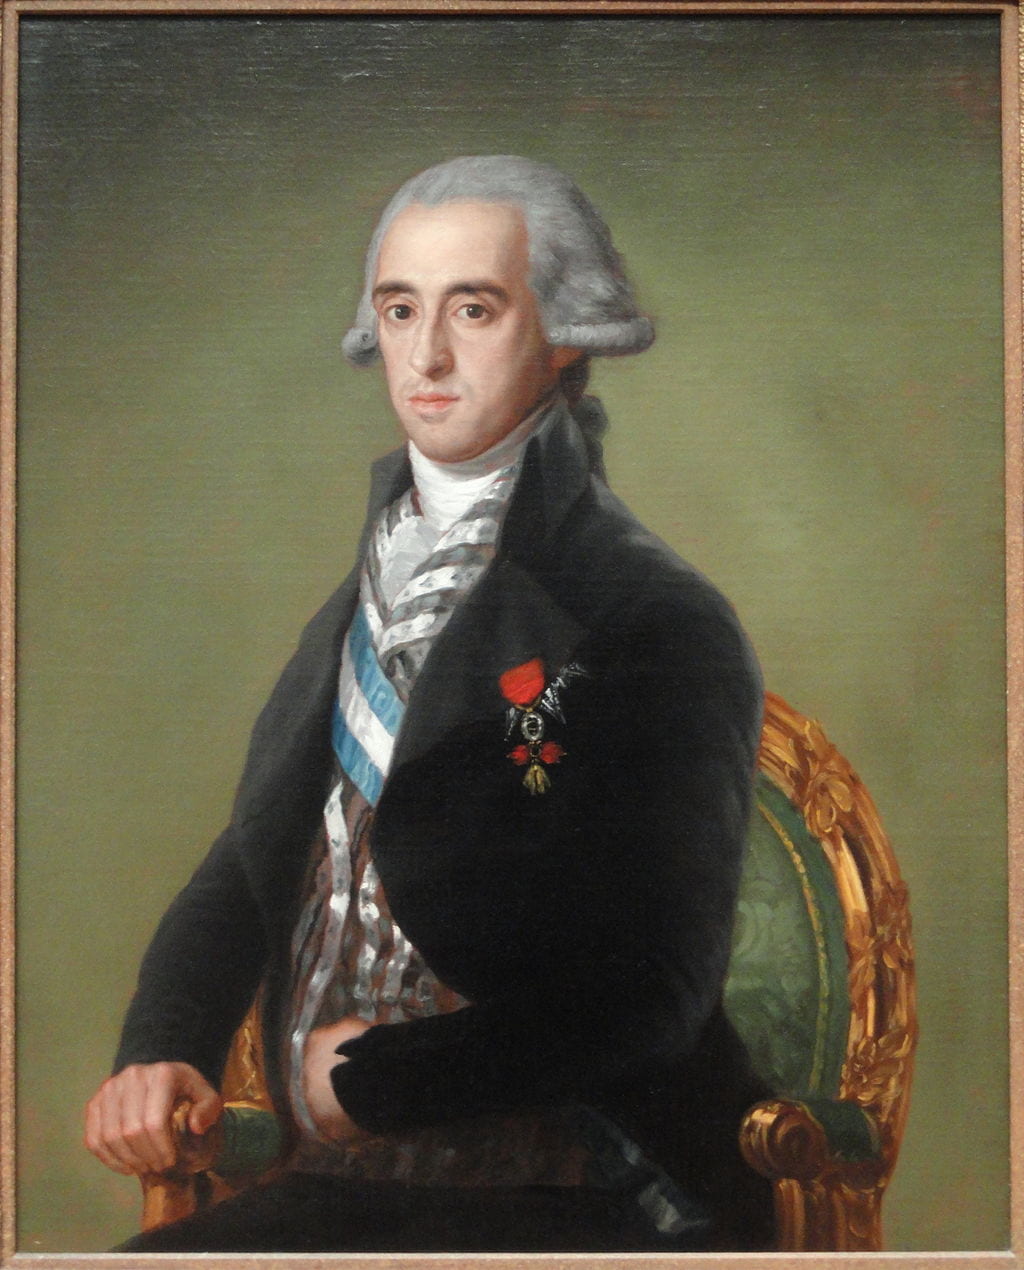 Francisco de Goya y Lucientes (Spanish, 1746 - 1828), Portrait of José Alvarez de Toledo, Duke of Alba, c. 1795, Wikimedia Commons 